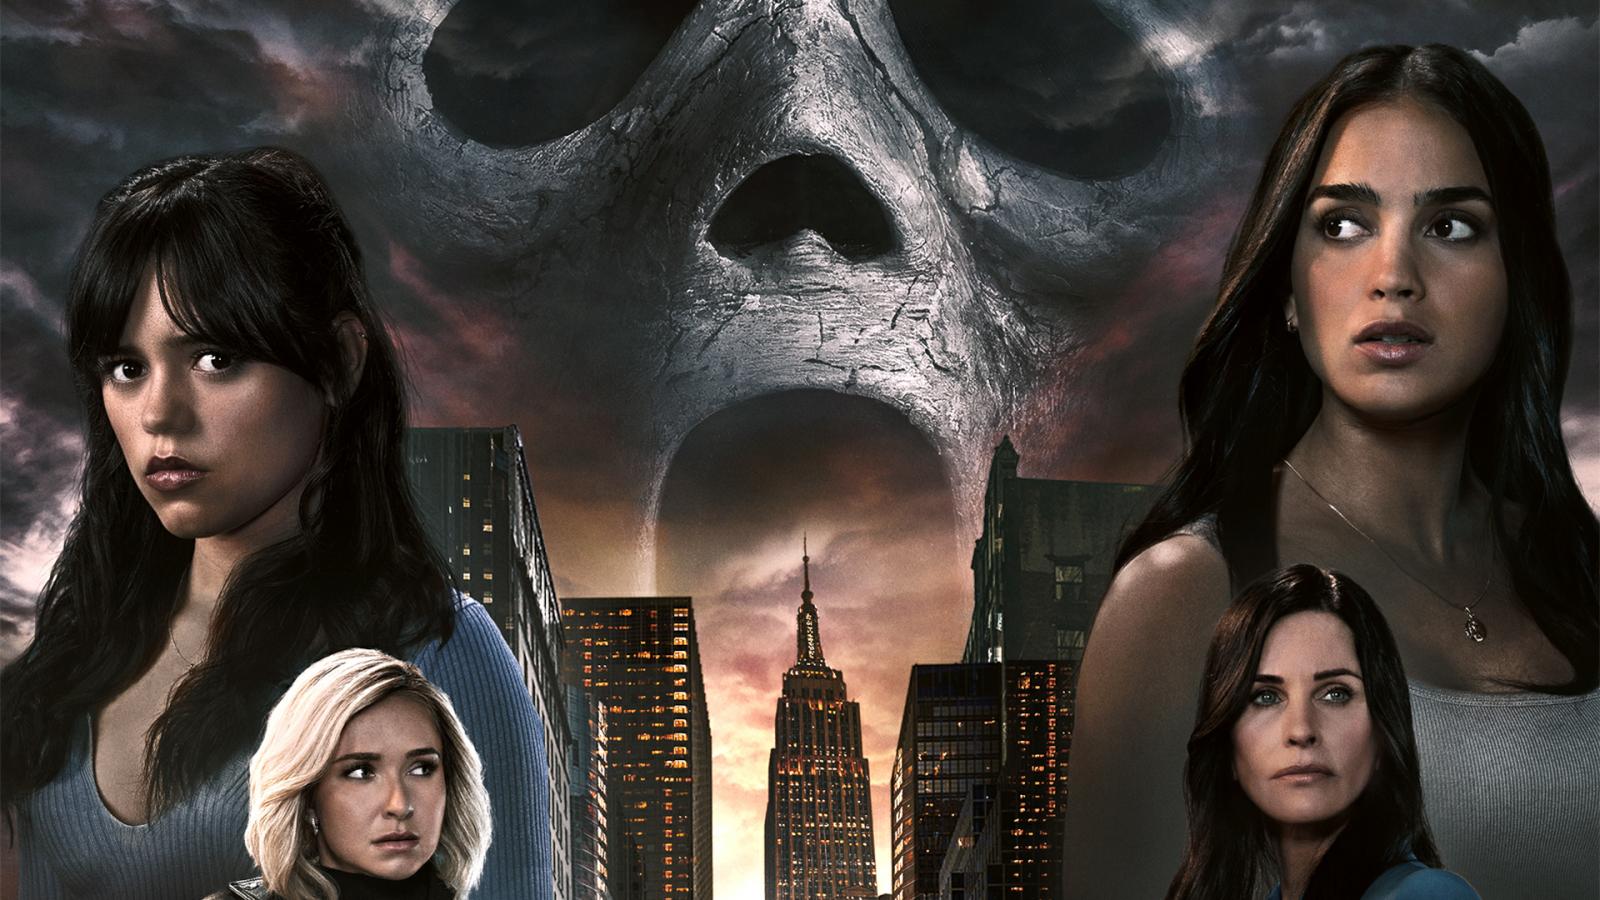 Scream 6 Review - IGN